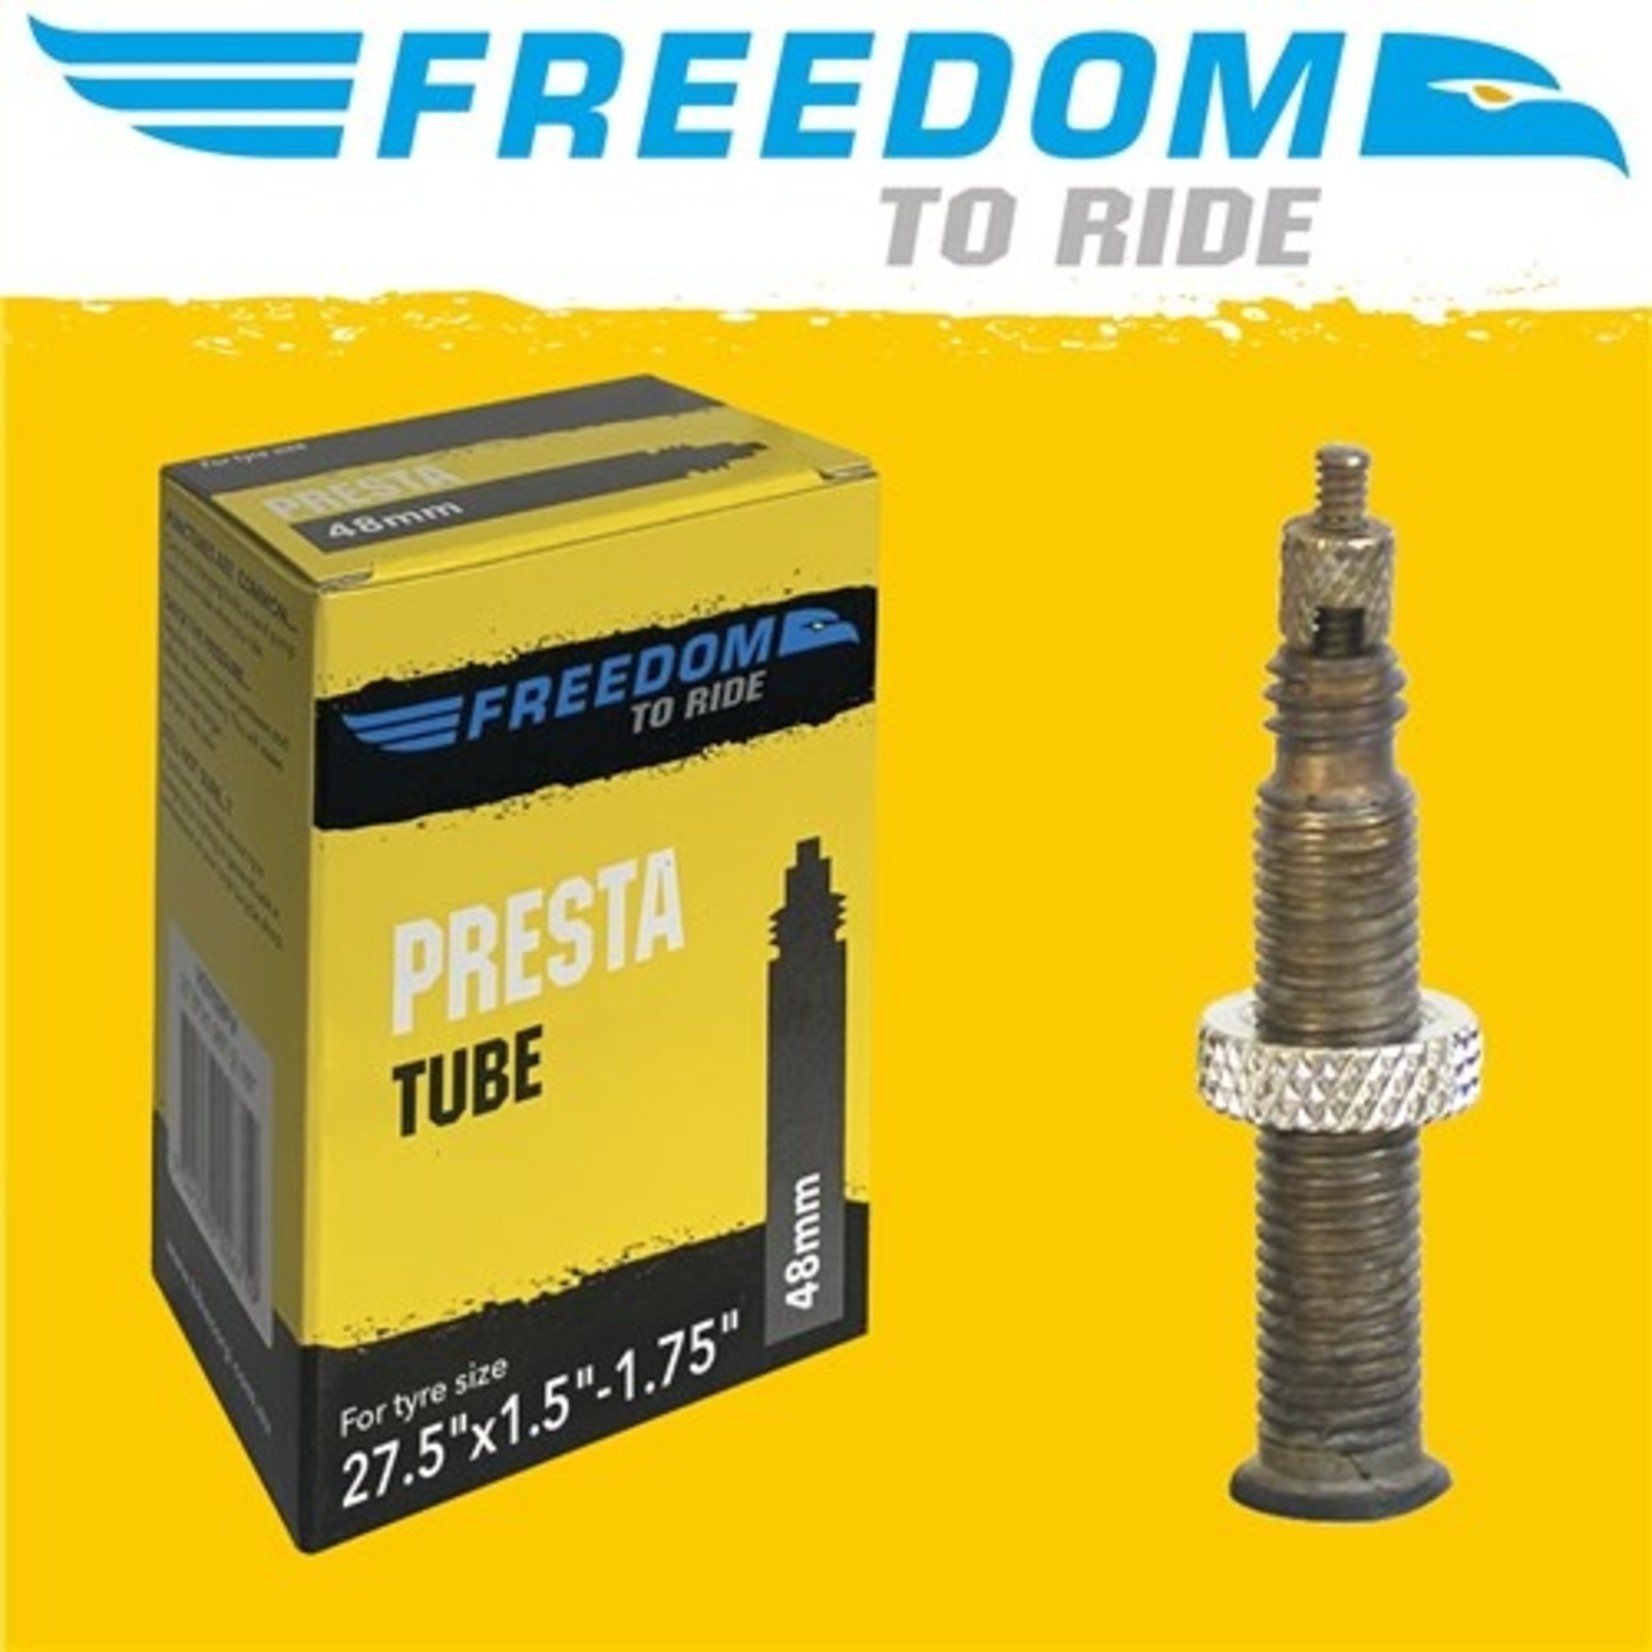 Freedom Freedom Bike Tube - 27.5" X 1.5-1.75" - Presta Valve 48mm